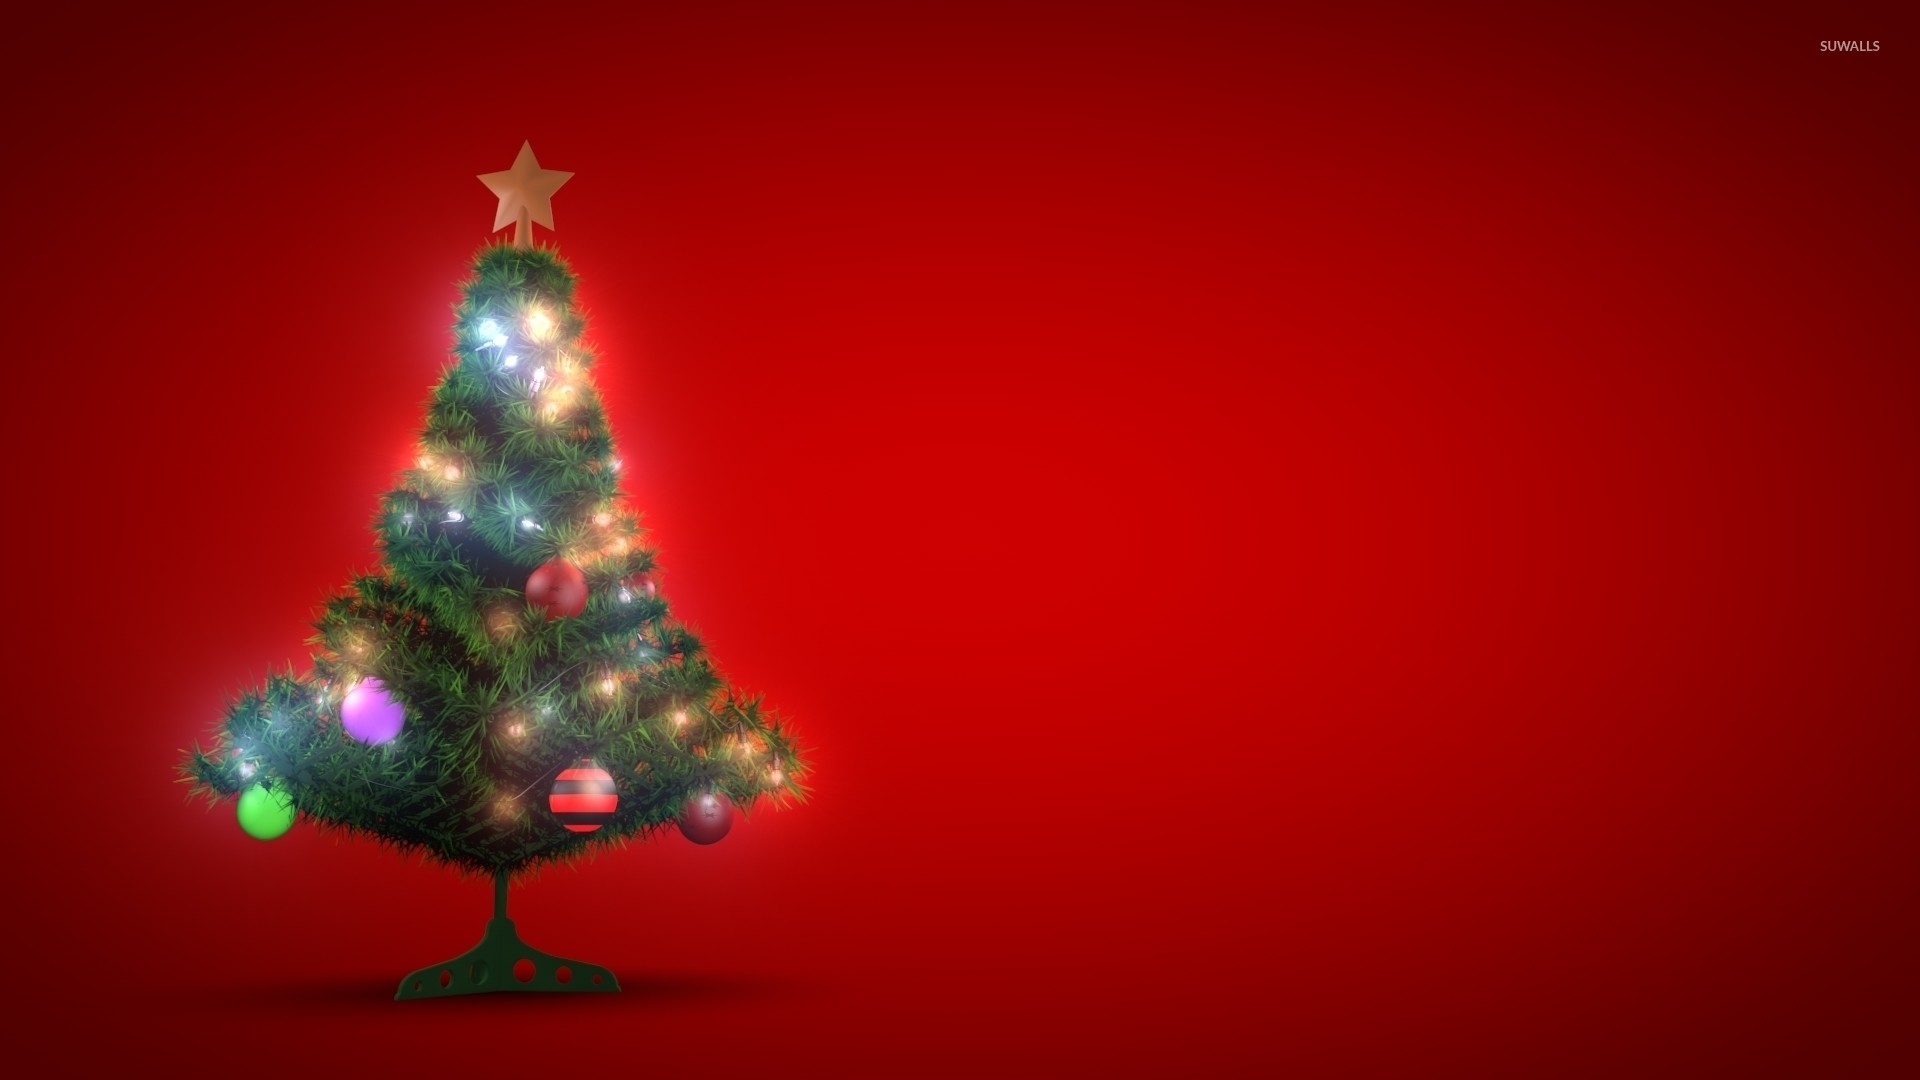 1920x1080 Small glowing Christmas tree wallpaper  jpg